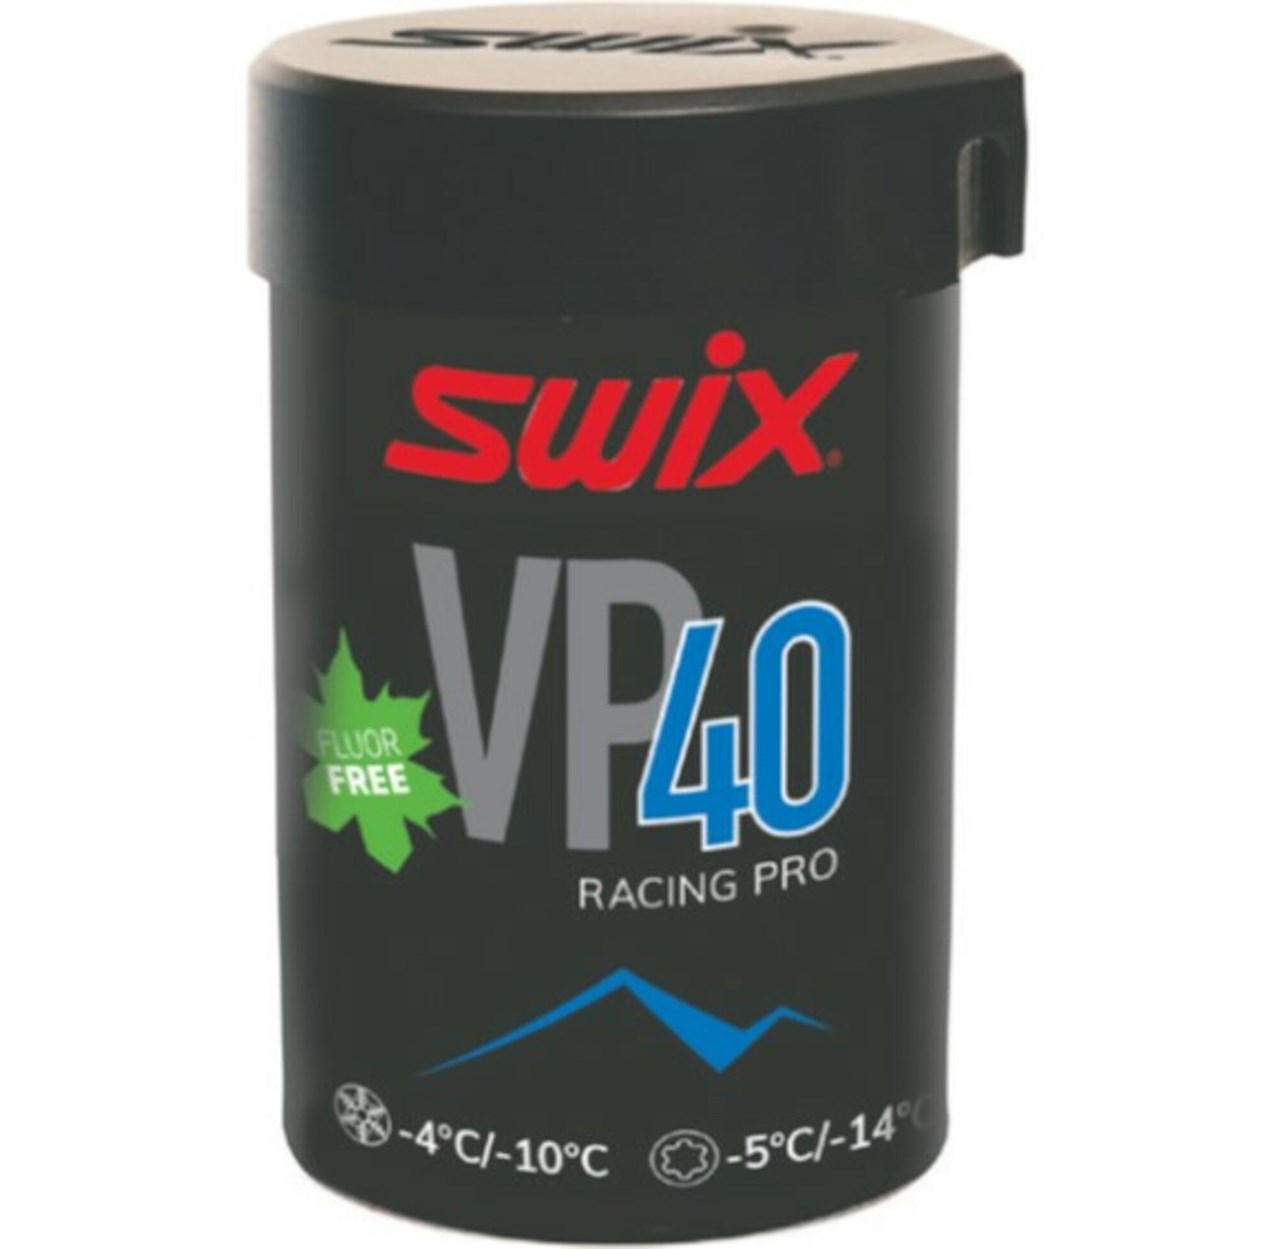 VP40 Pro blue -10 to -4